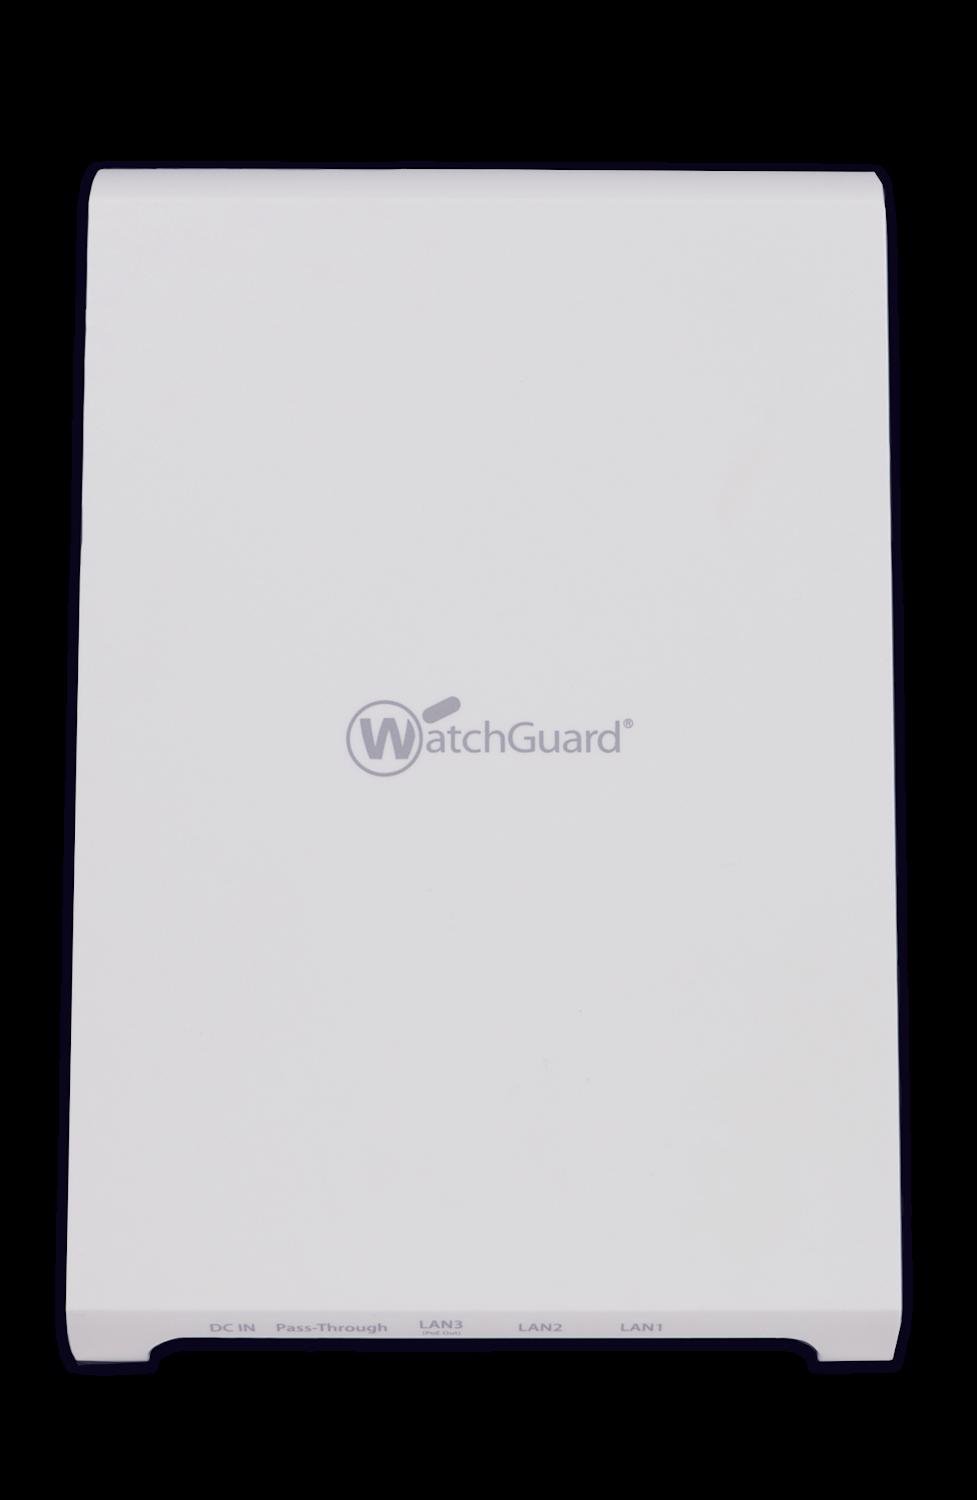 WatchGuard Ap225w And 3-YR Total Wi-Fi